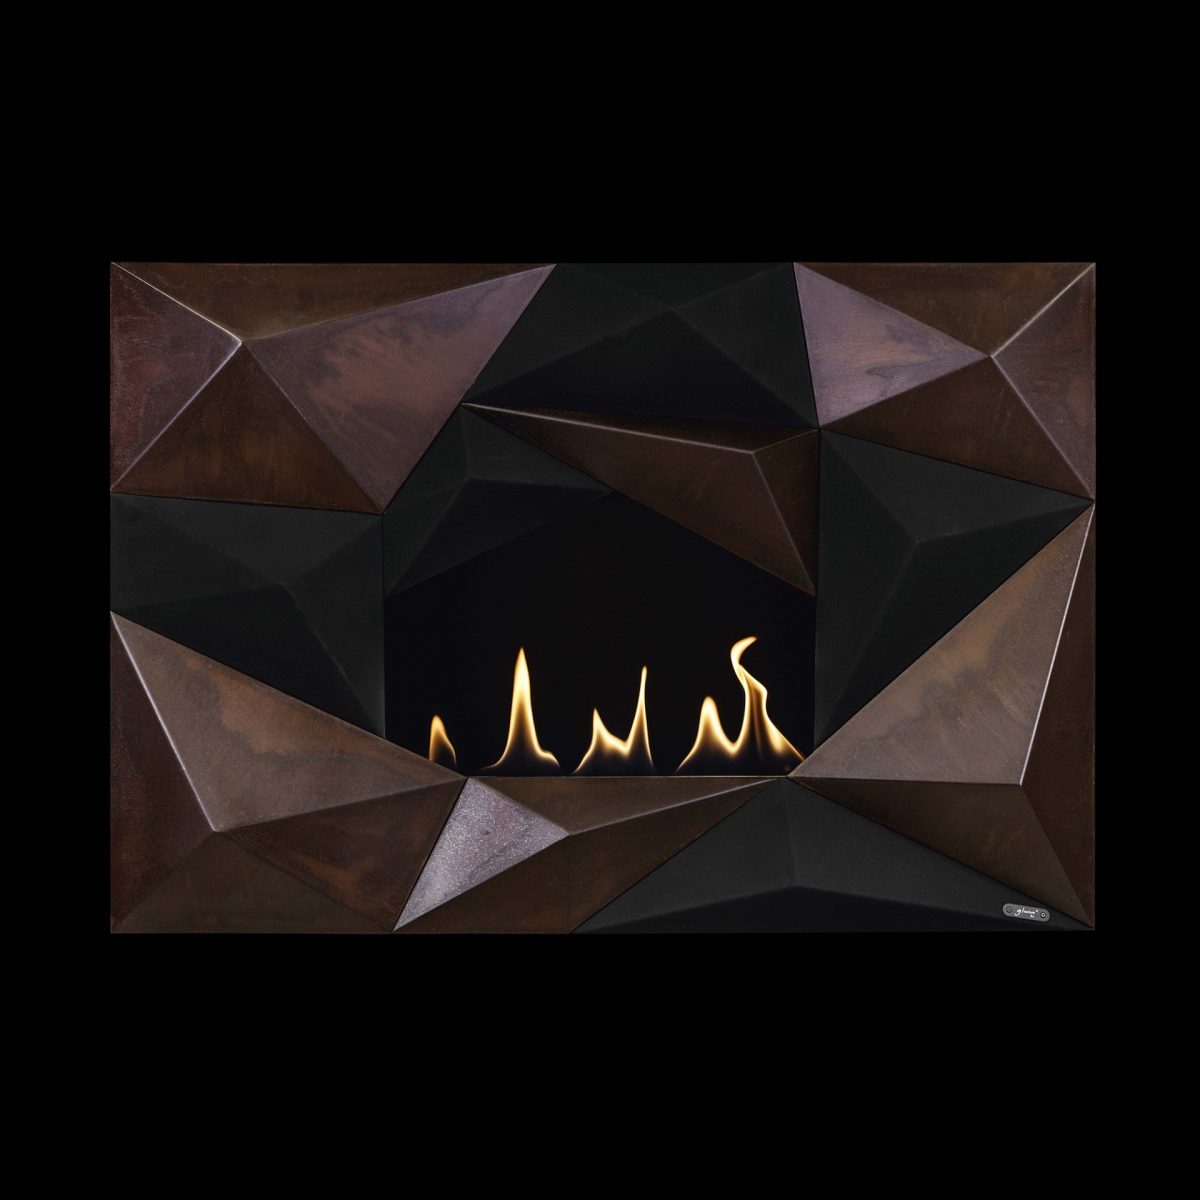 xglammfire_fireplace_crystal_hd_001-1-1920x1920.jpg.pagespeed.ic.lhesZa9zWL